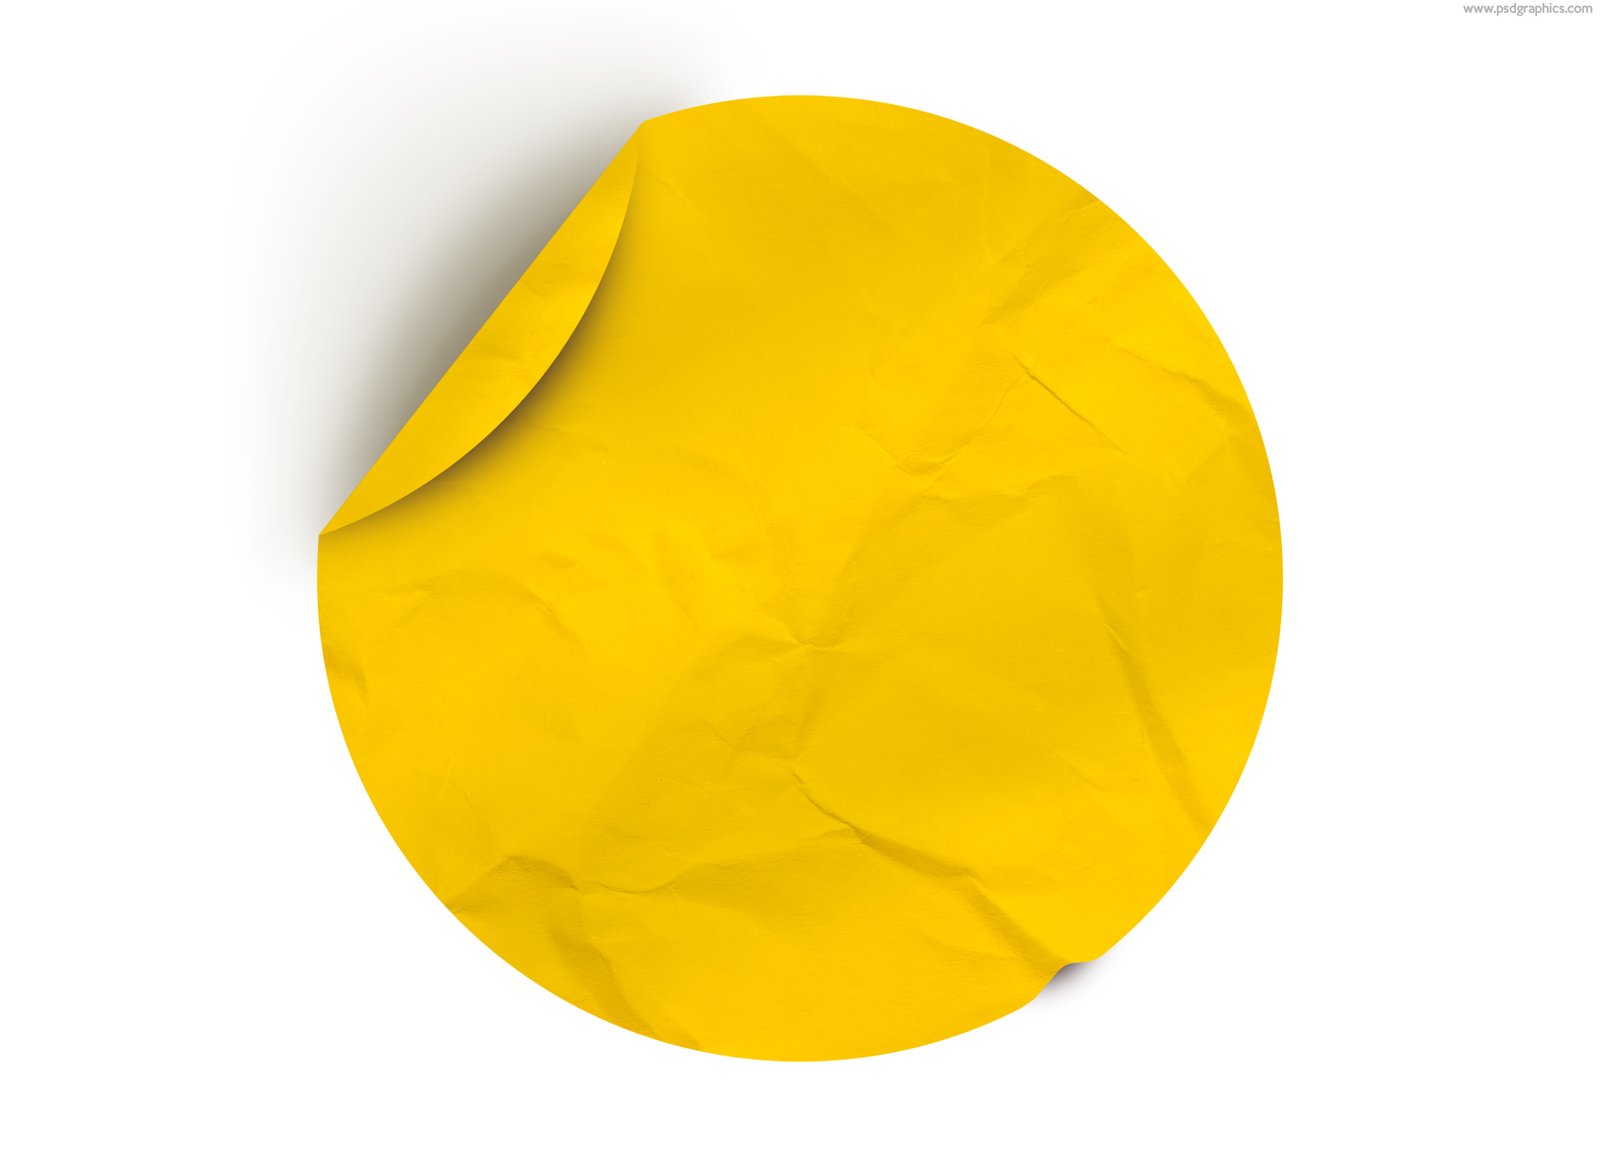 https://www.psdgraphics.com/wp-content/uploads/2021/04/round-yellow-paper-sticker-template.jpg